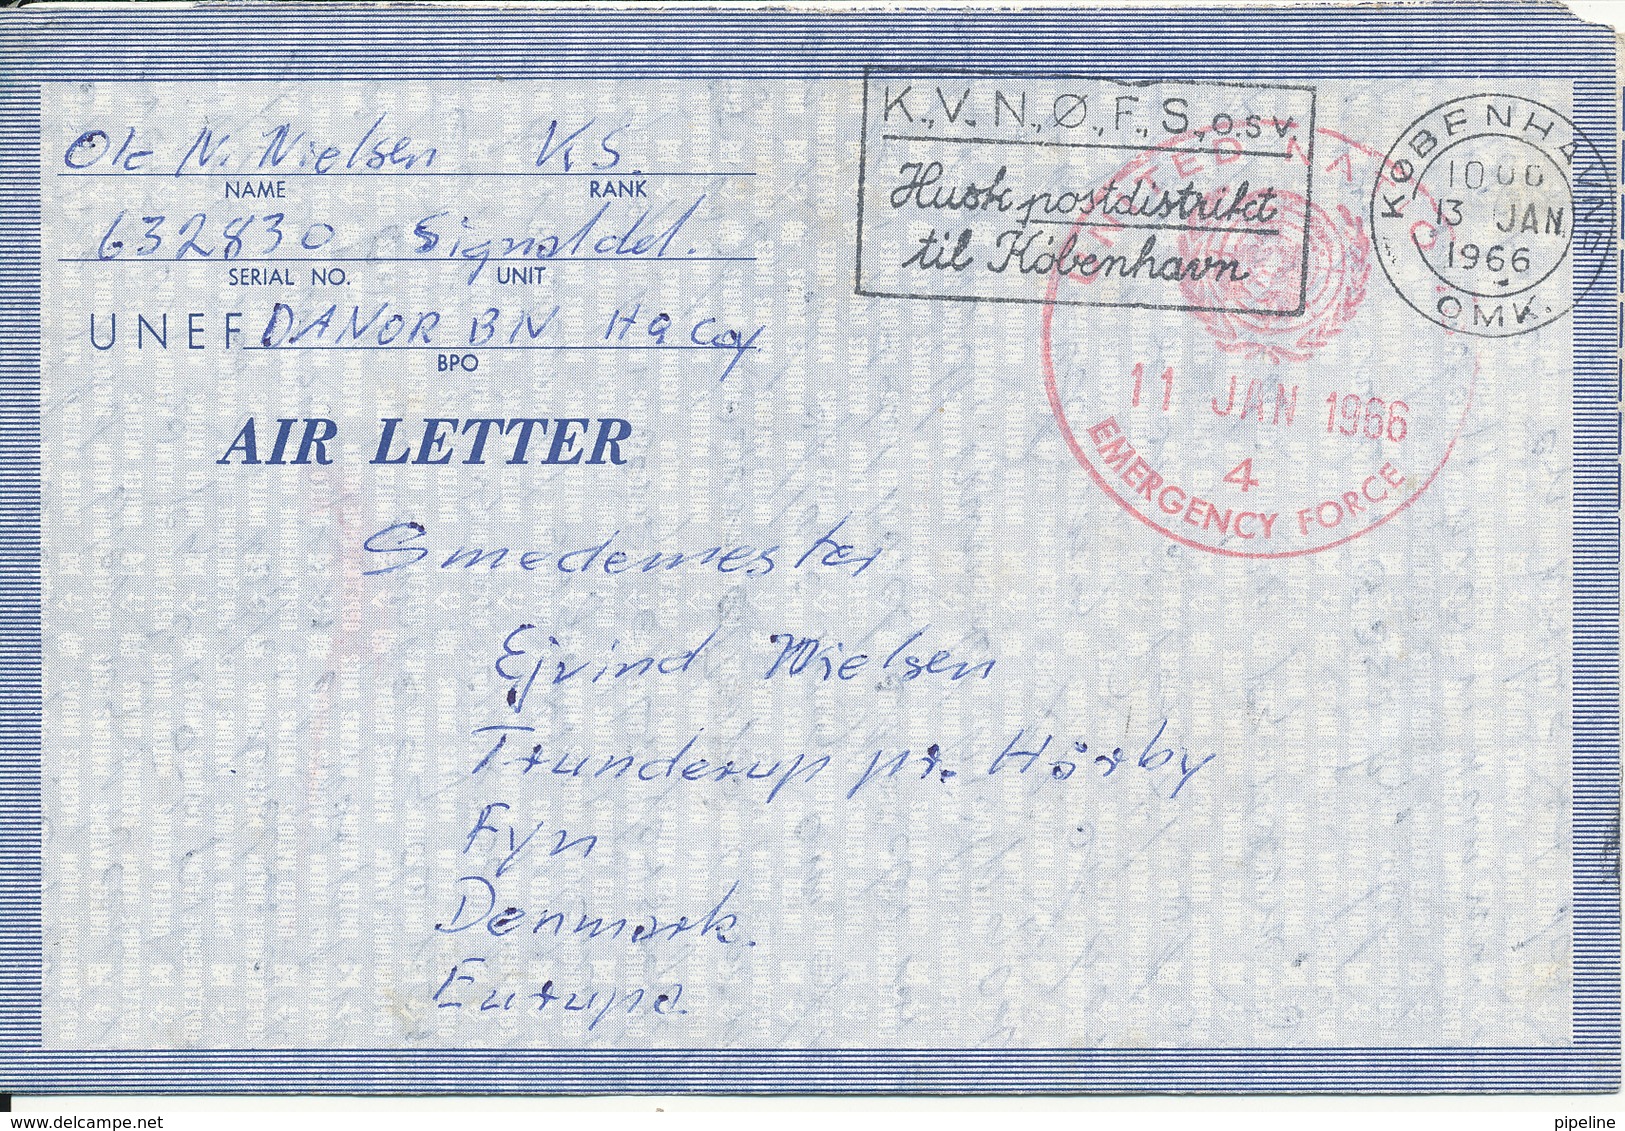 Denmark Air Letter United Nations Emergency Force 11-1-1966 UNEF DANOR BN HG Coy Gaza/Egypt - Lettres & Documents